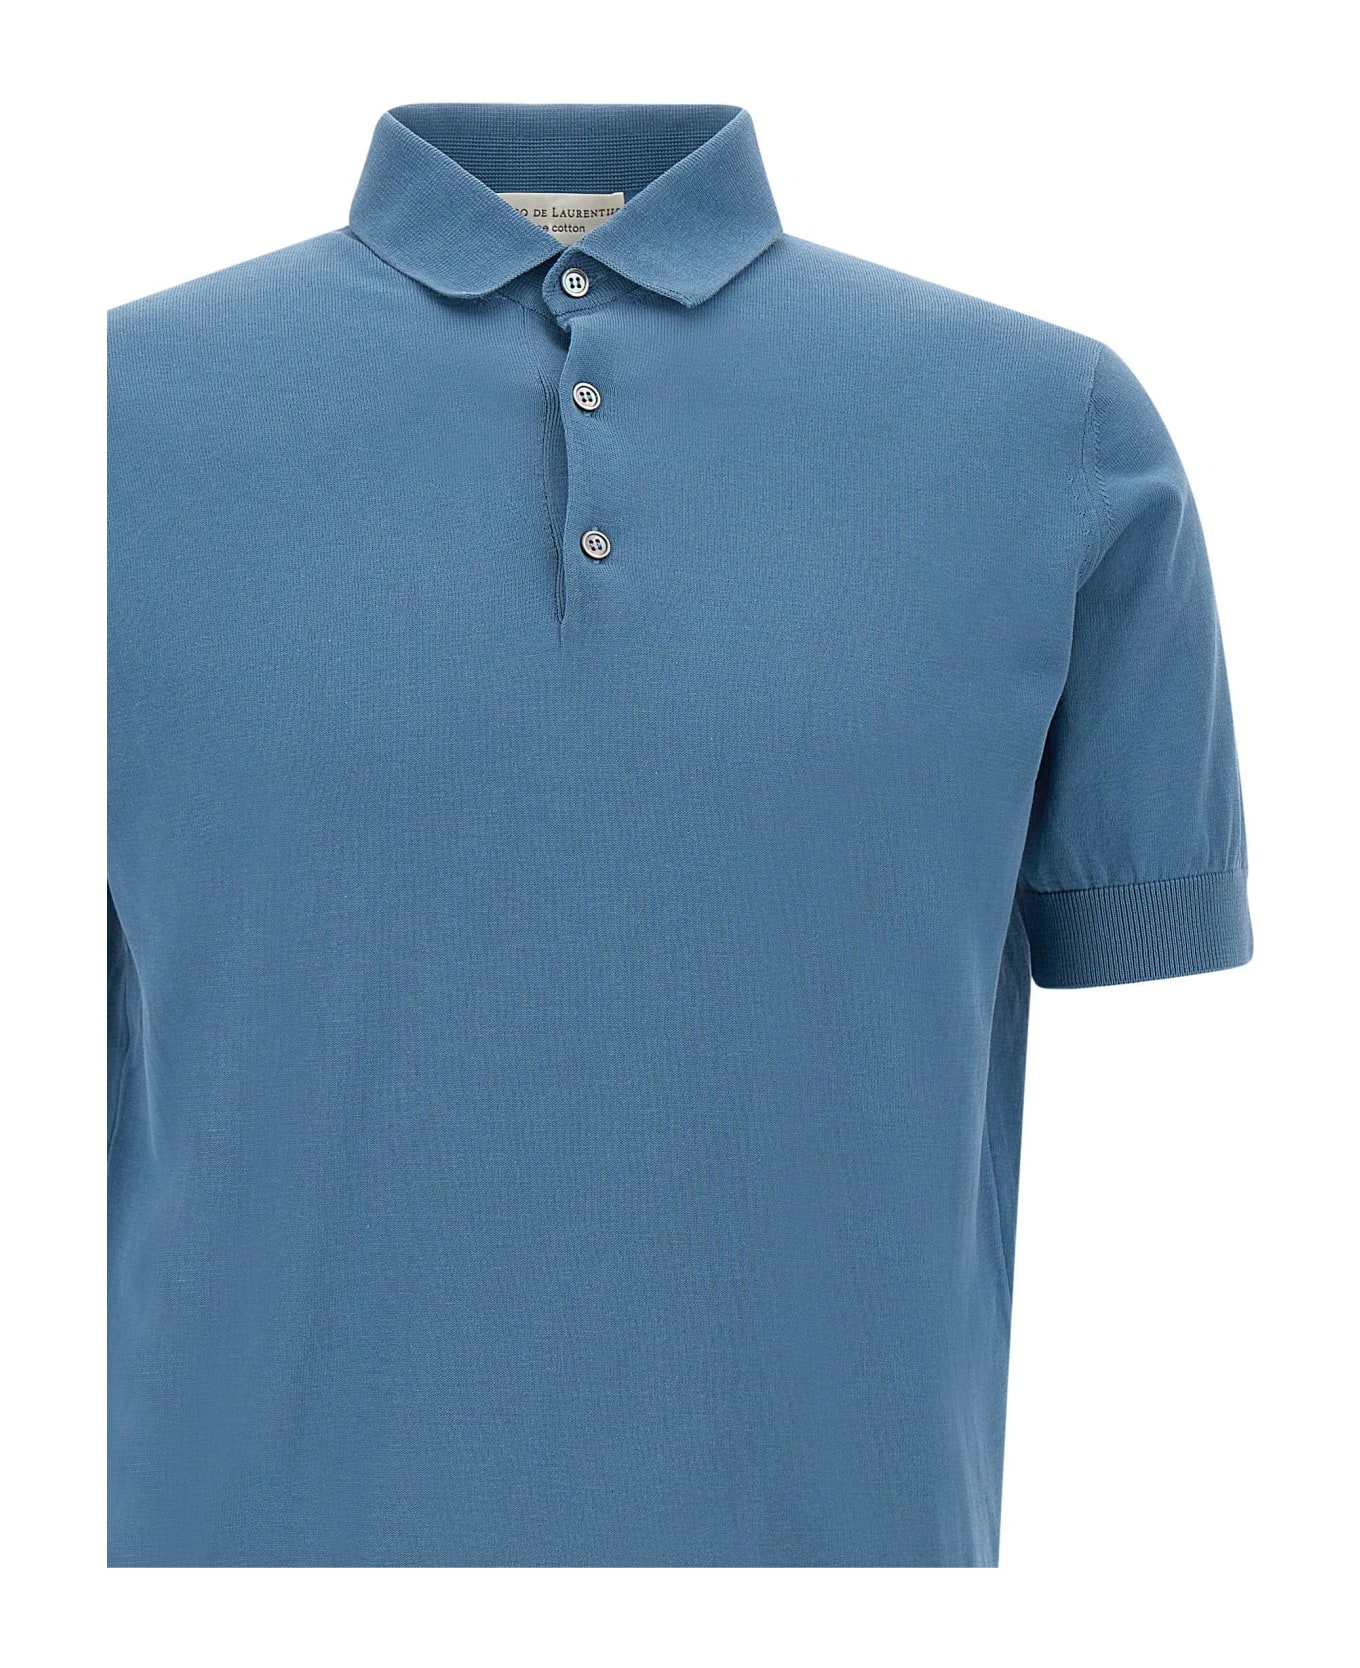 Filippo De Laurentiis Cotton Crepe Polo Shirt ポロシャツ